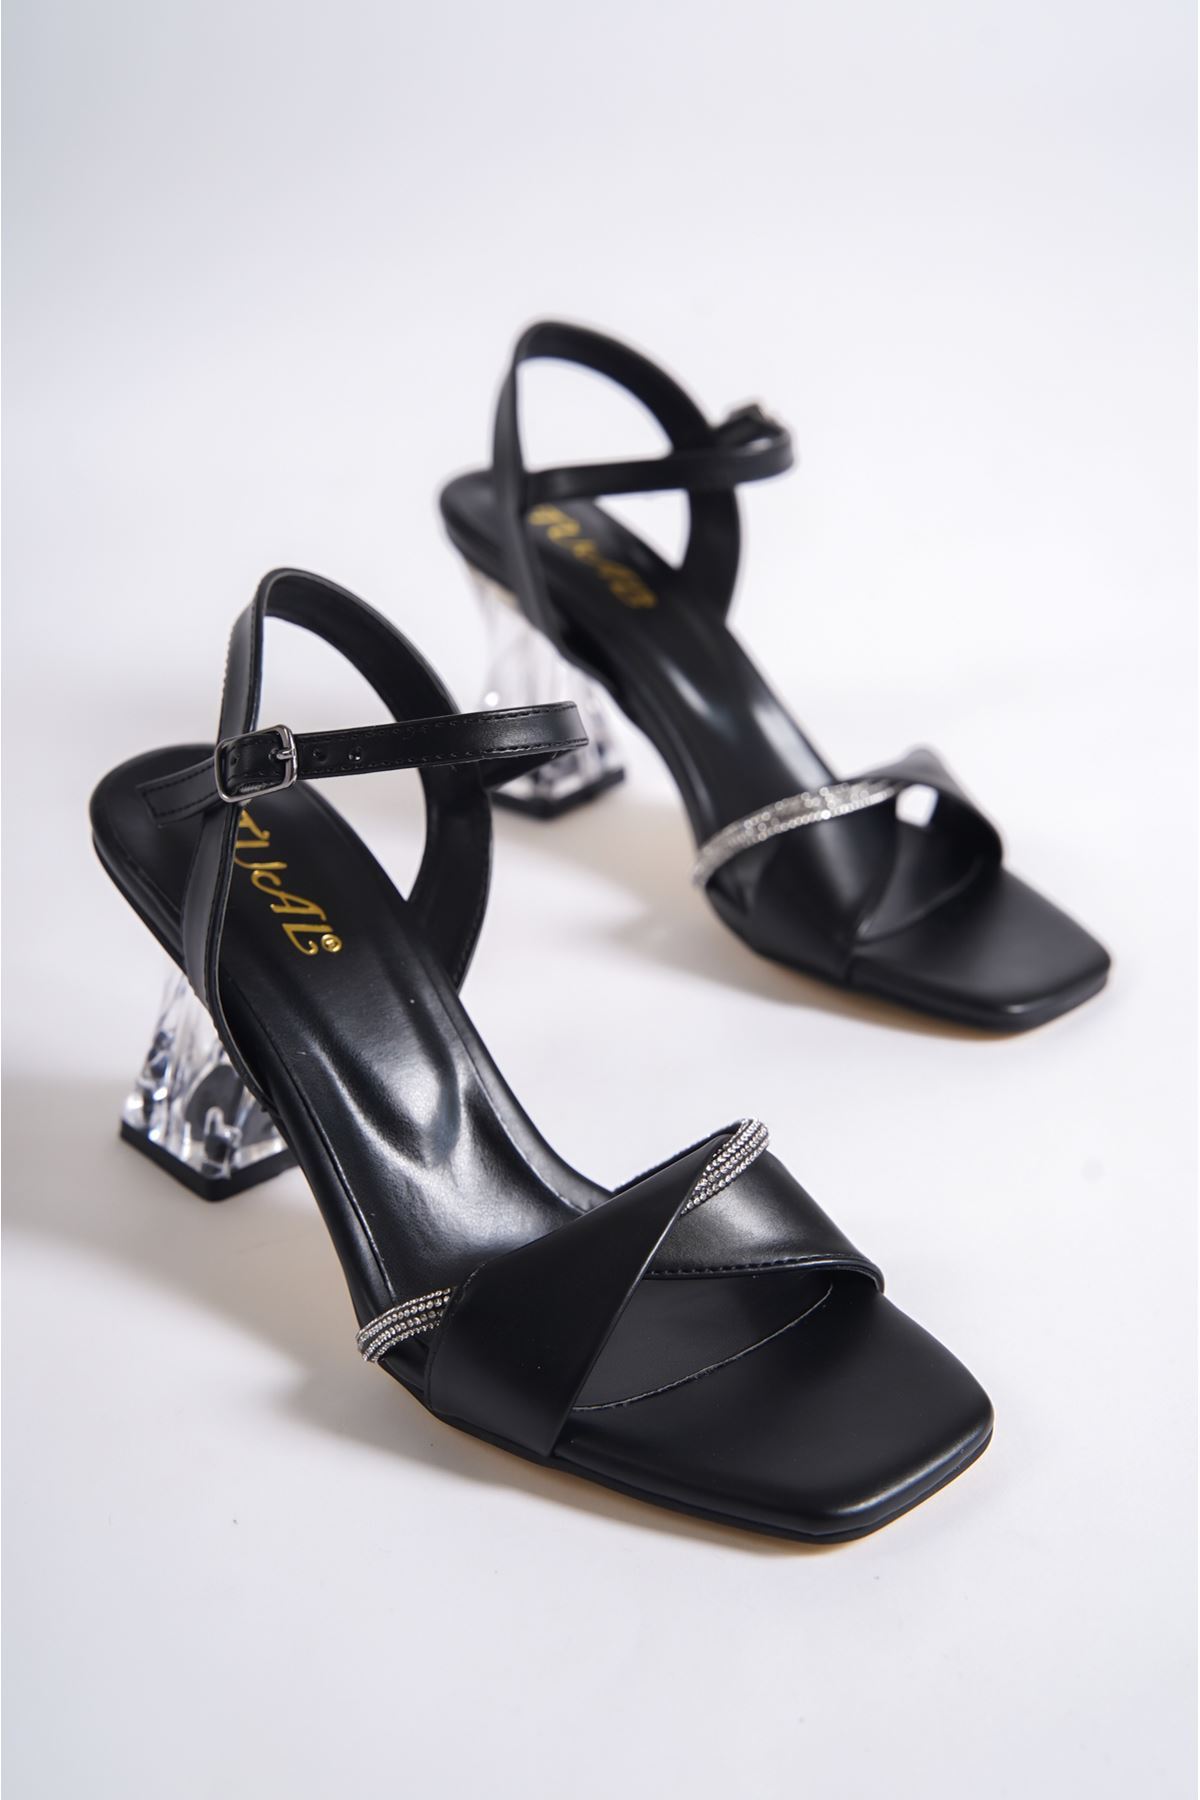 Thayer Siyah Mat Deri Kadın Şeffaf Topuklu Ayakkabı